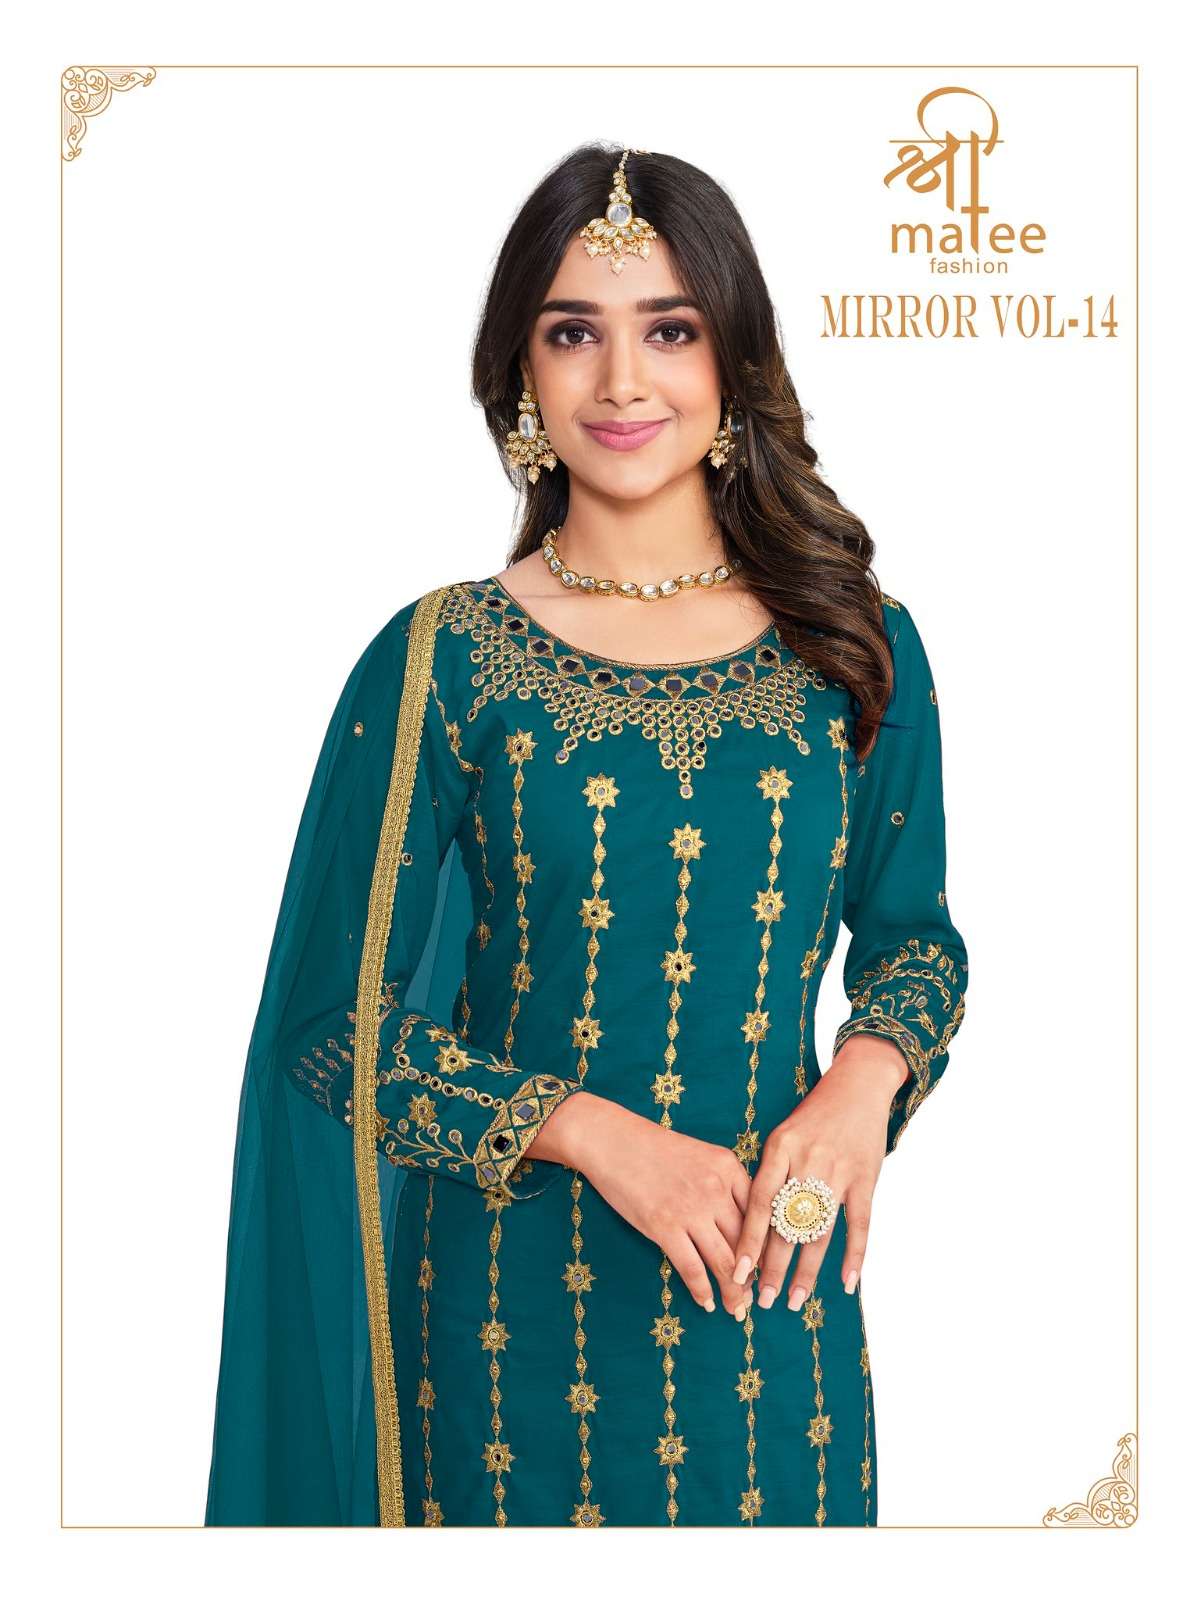 shreematee fashion mirror vol-14 173 series party wear designer salwar suits catalogue manufacturer surat